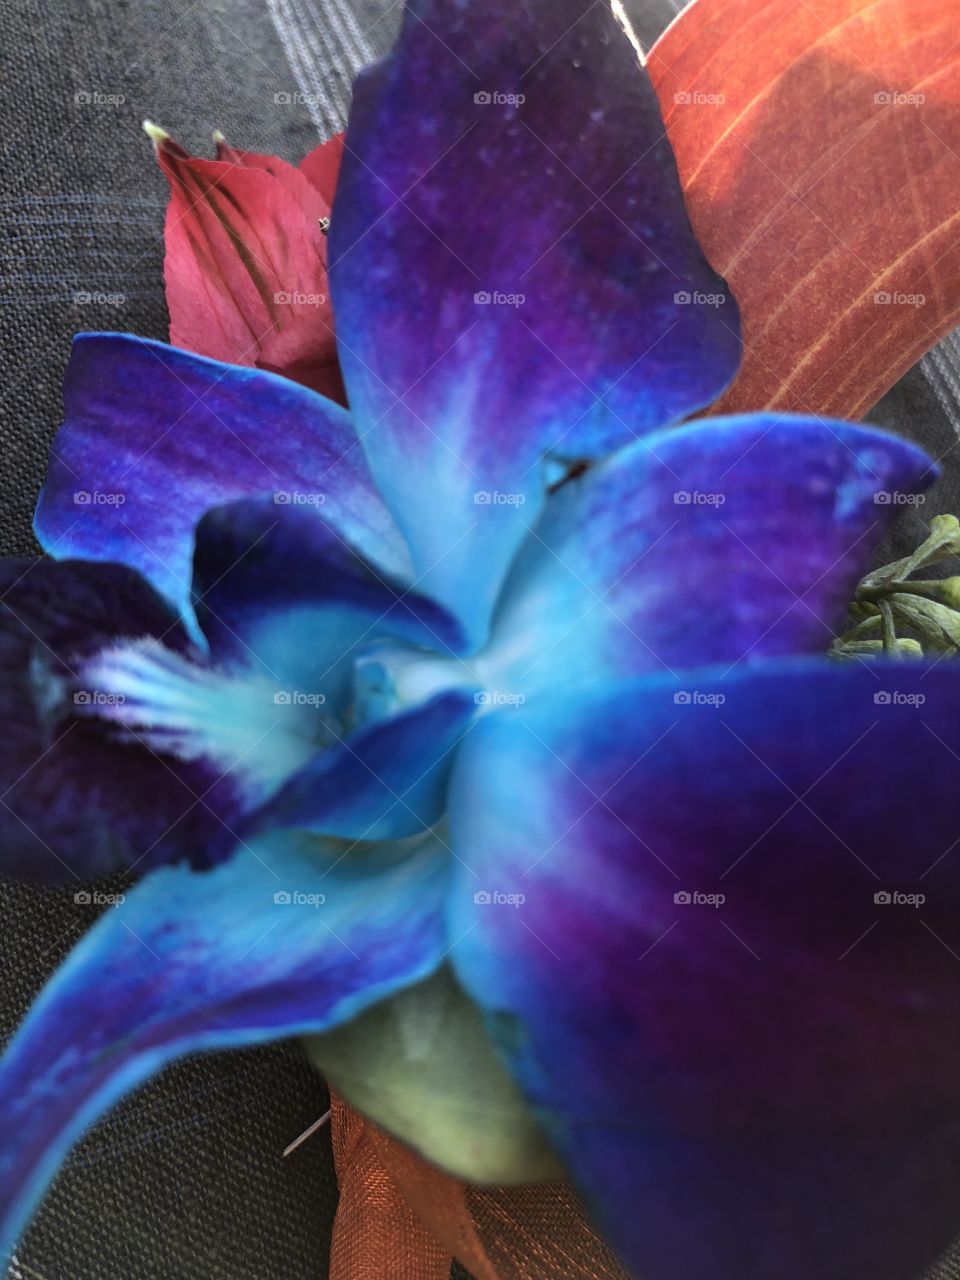 Purple/blue lilly